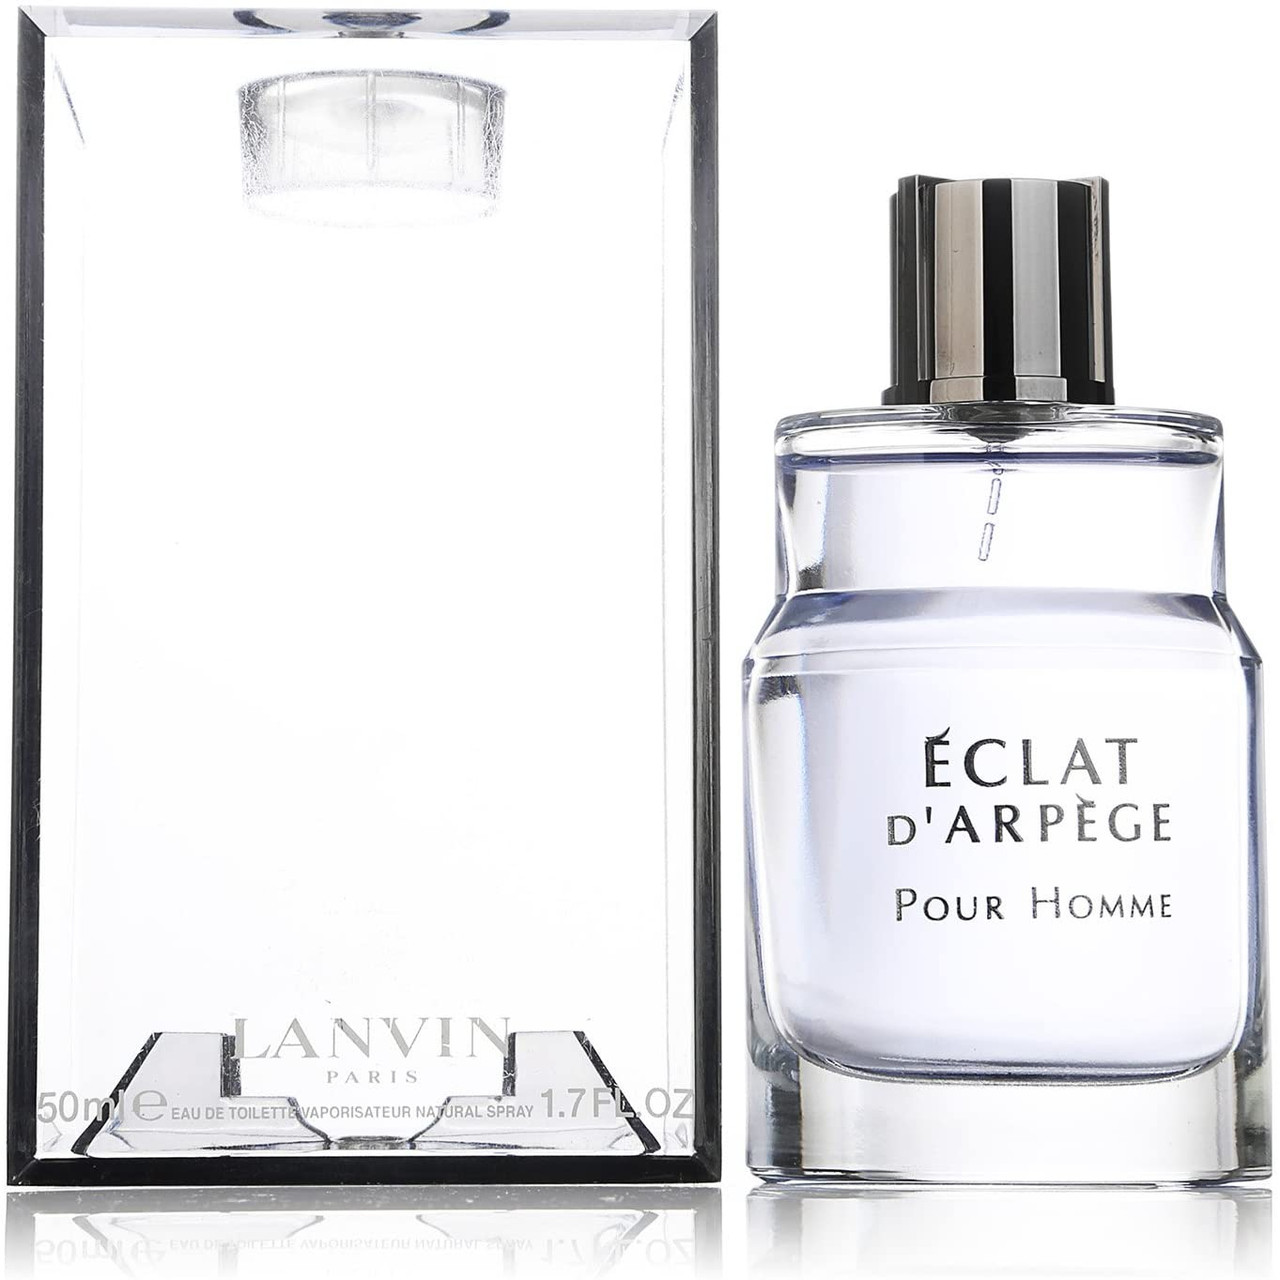 Eclat D'Arpege by Lanvin (EDT) for Men